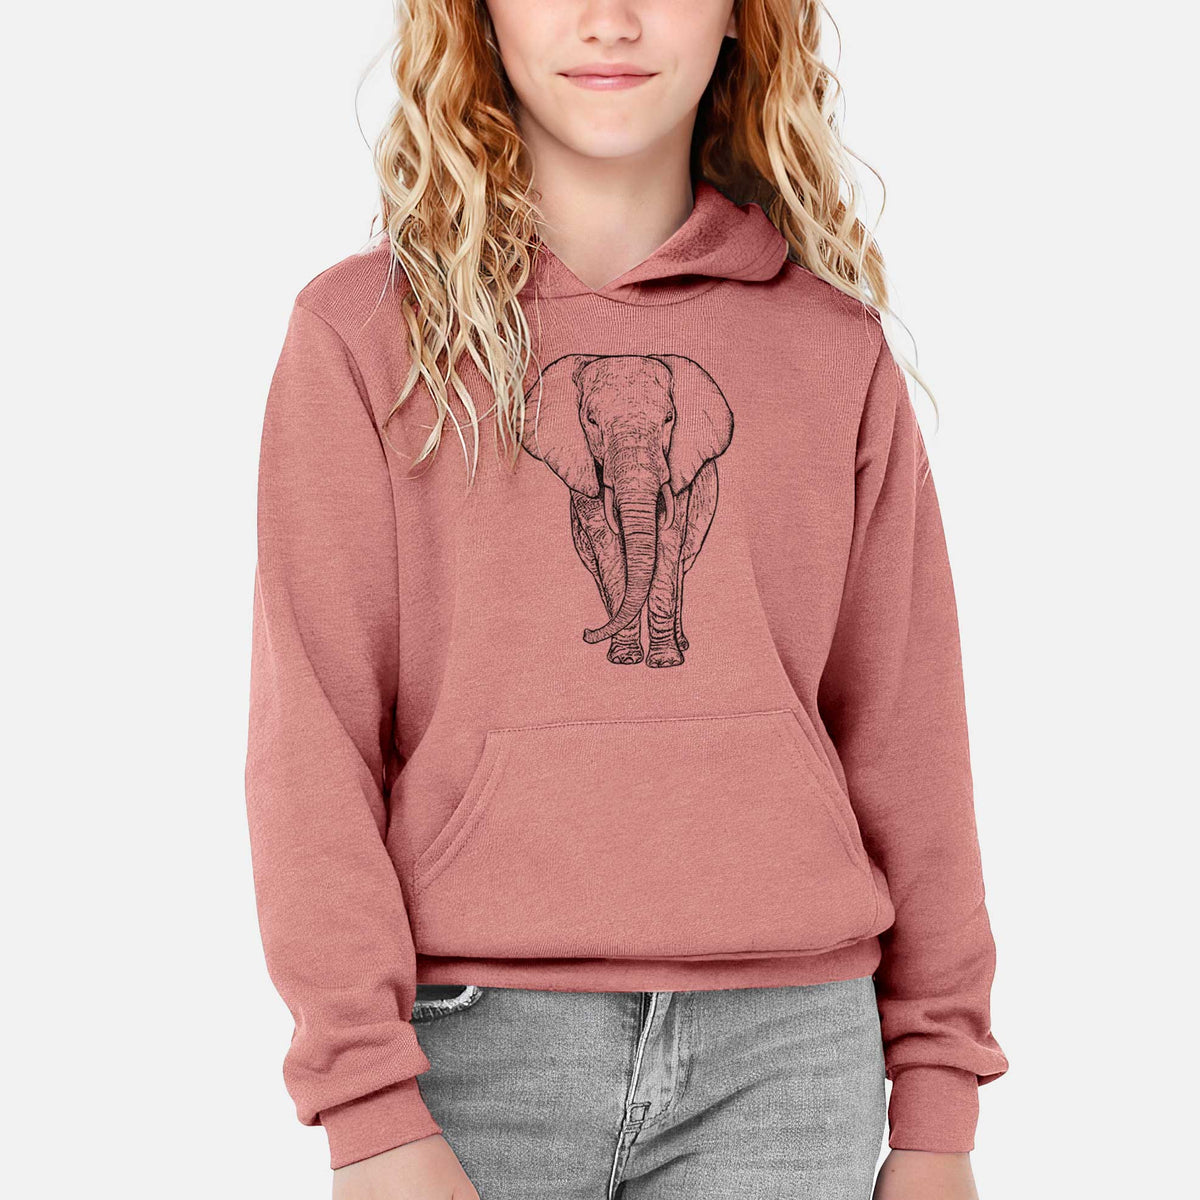 Loxodonta africana - African Elephant - Youth Hoodie Sweatshirt